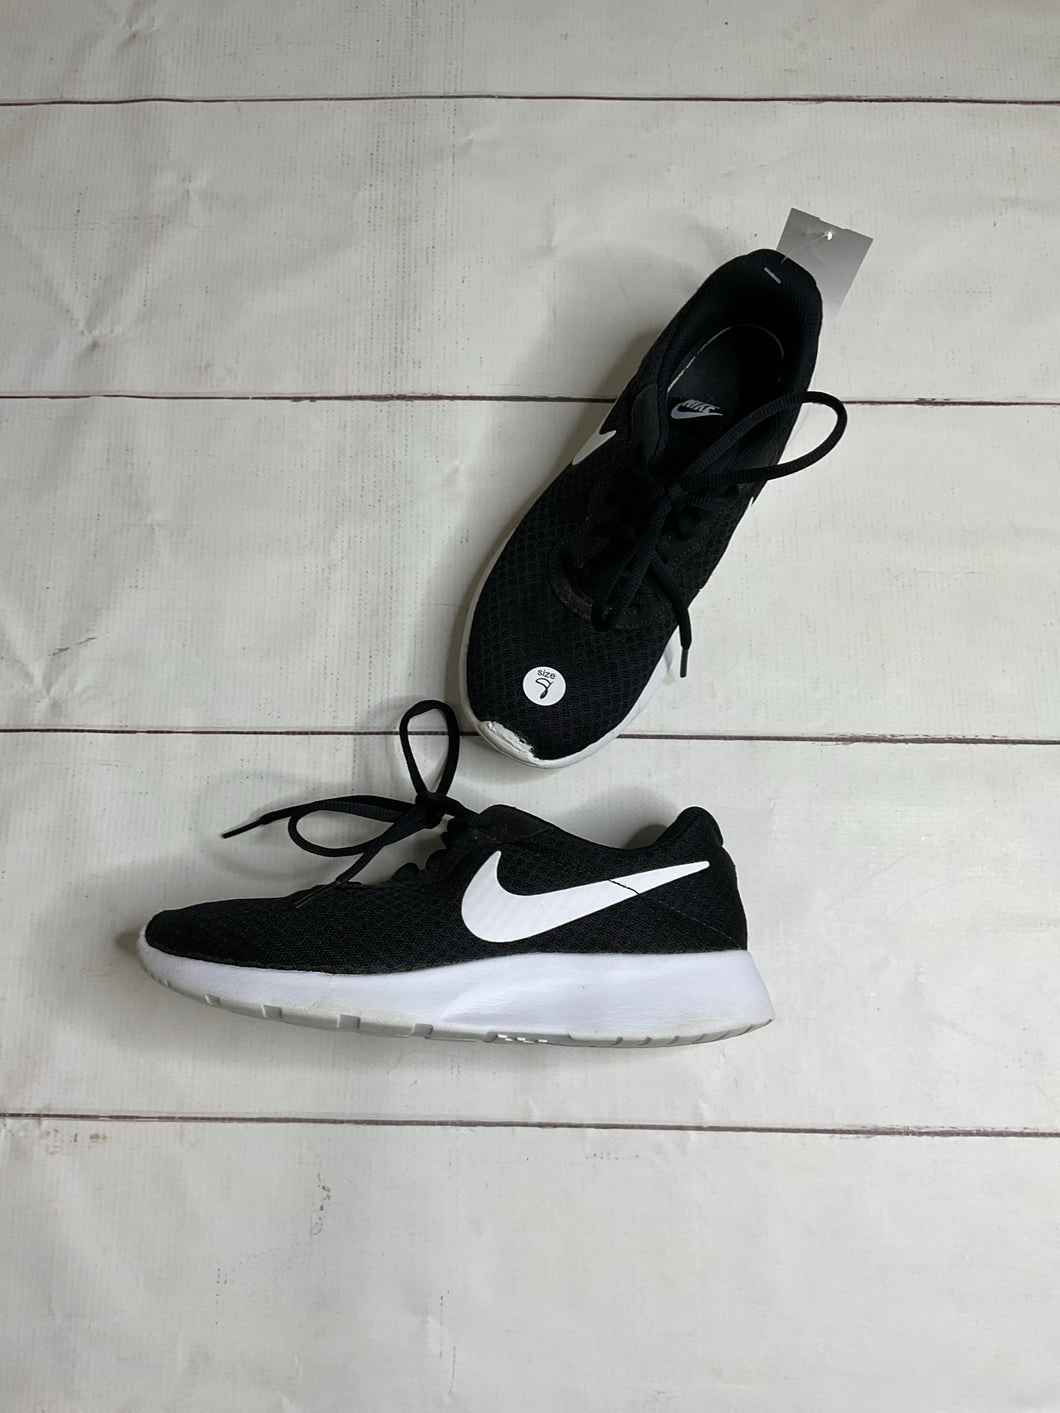 Nike Size 8 Tennis Shoes